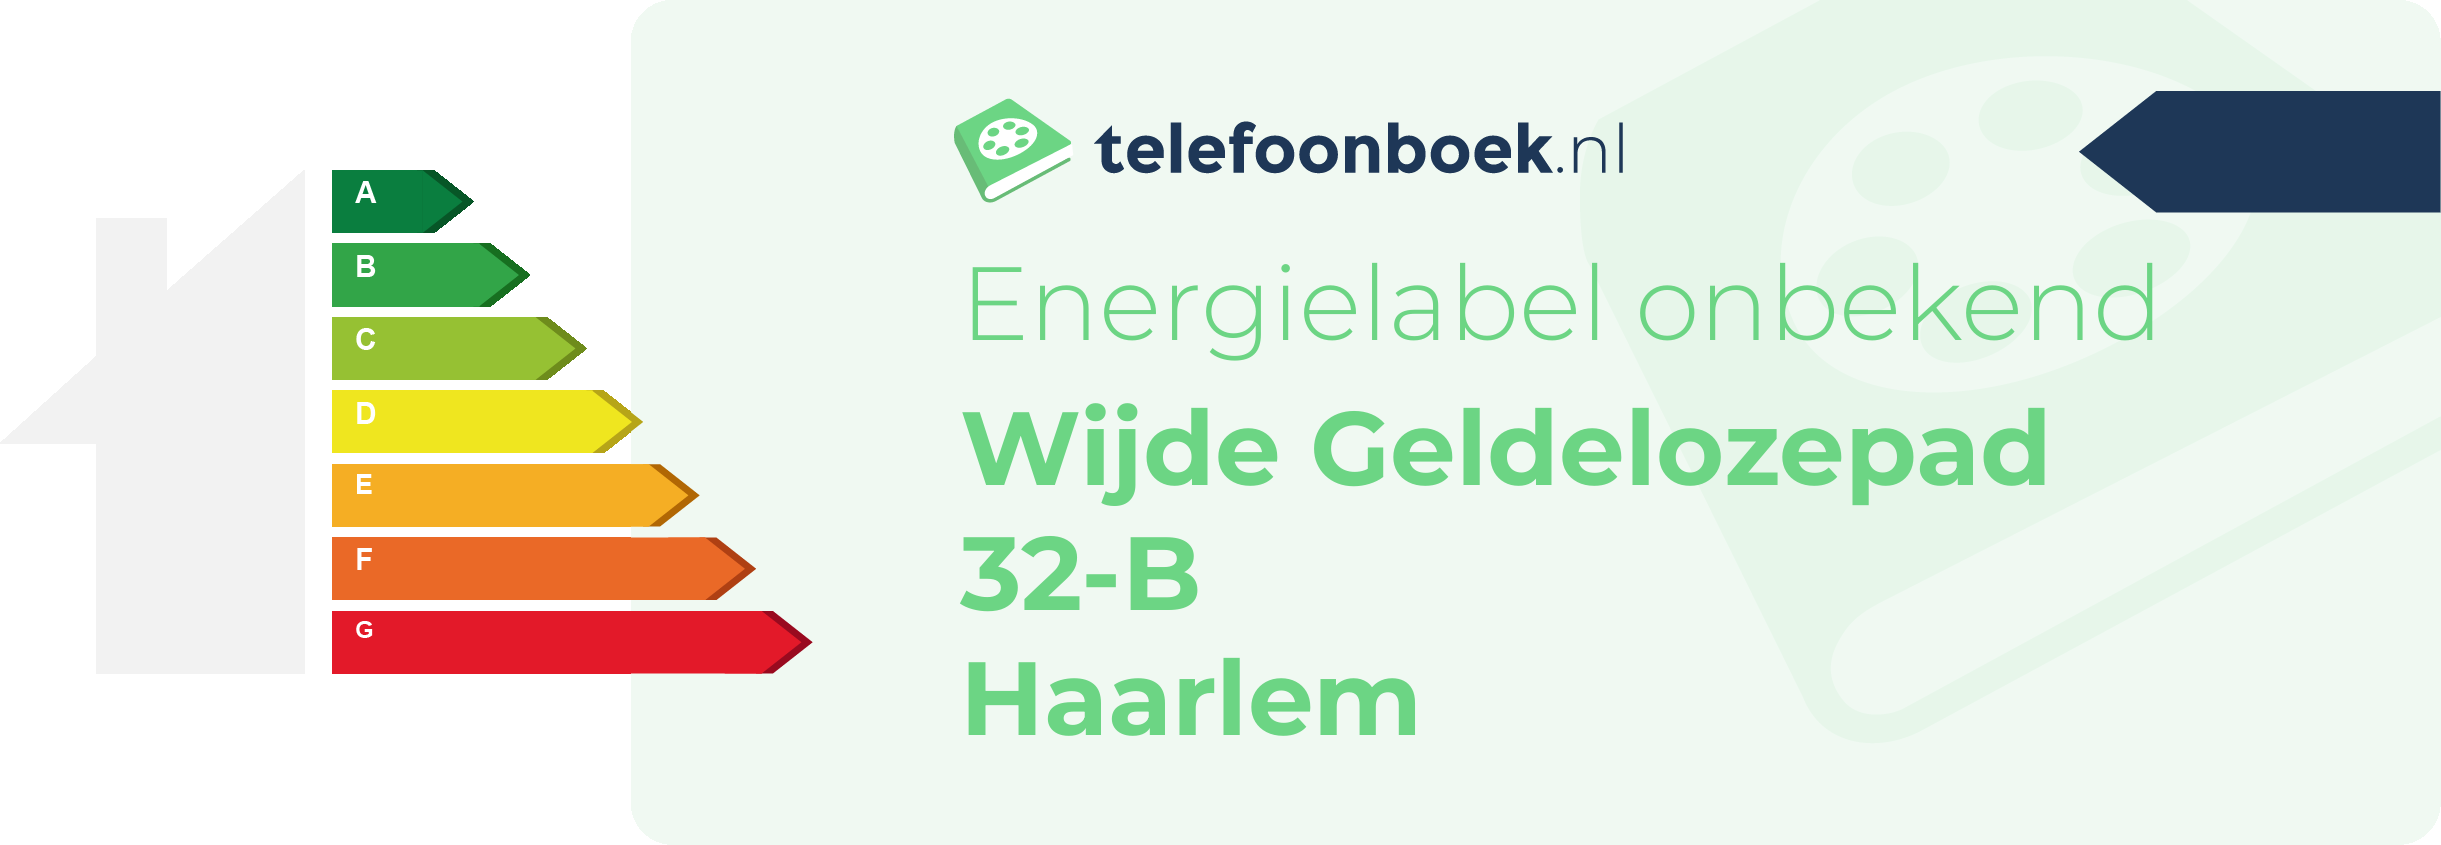 Energielabel Wijde Geldelozepad 32-B Haarlem